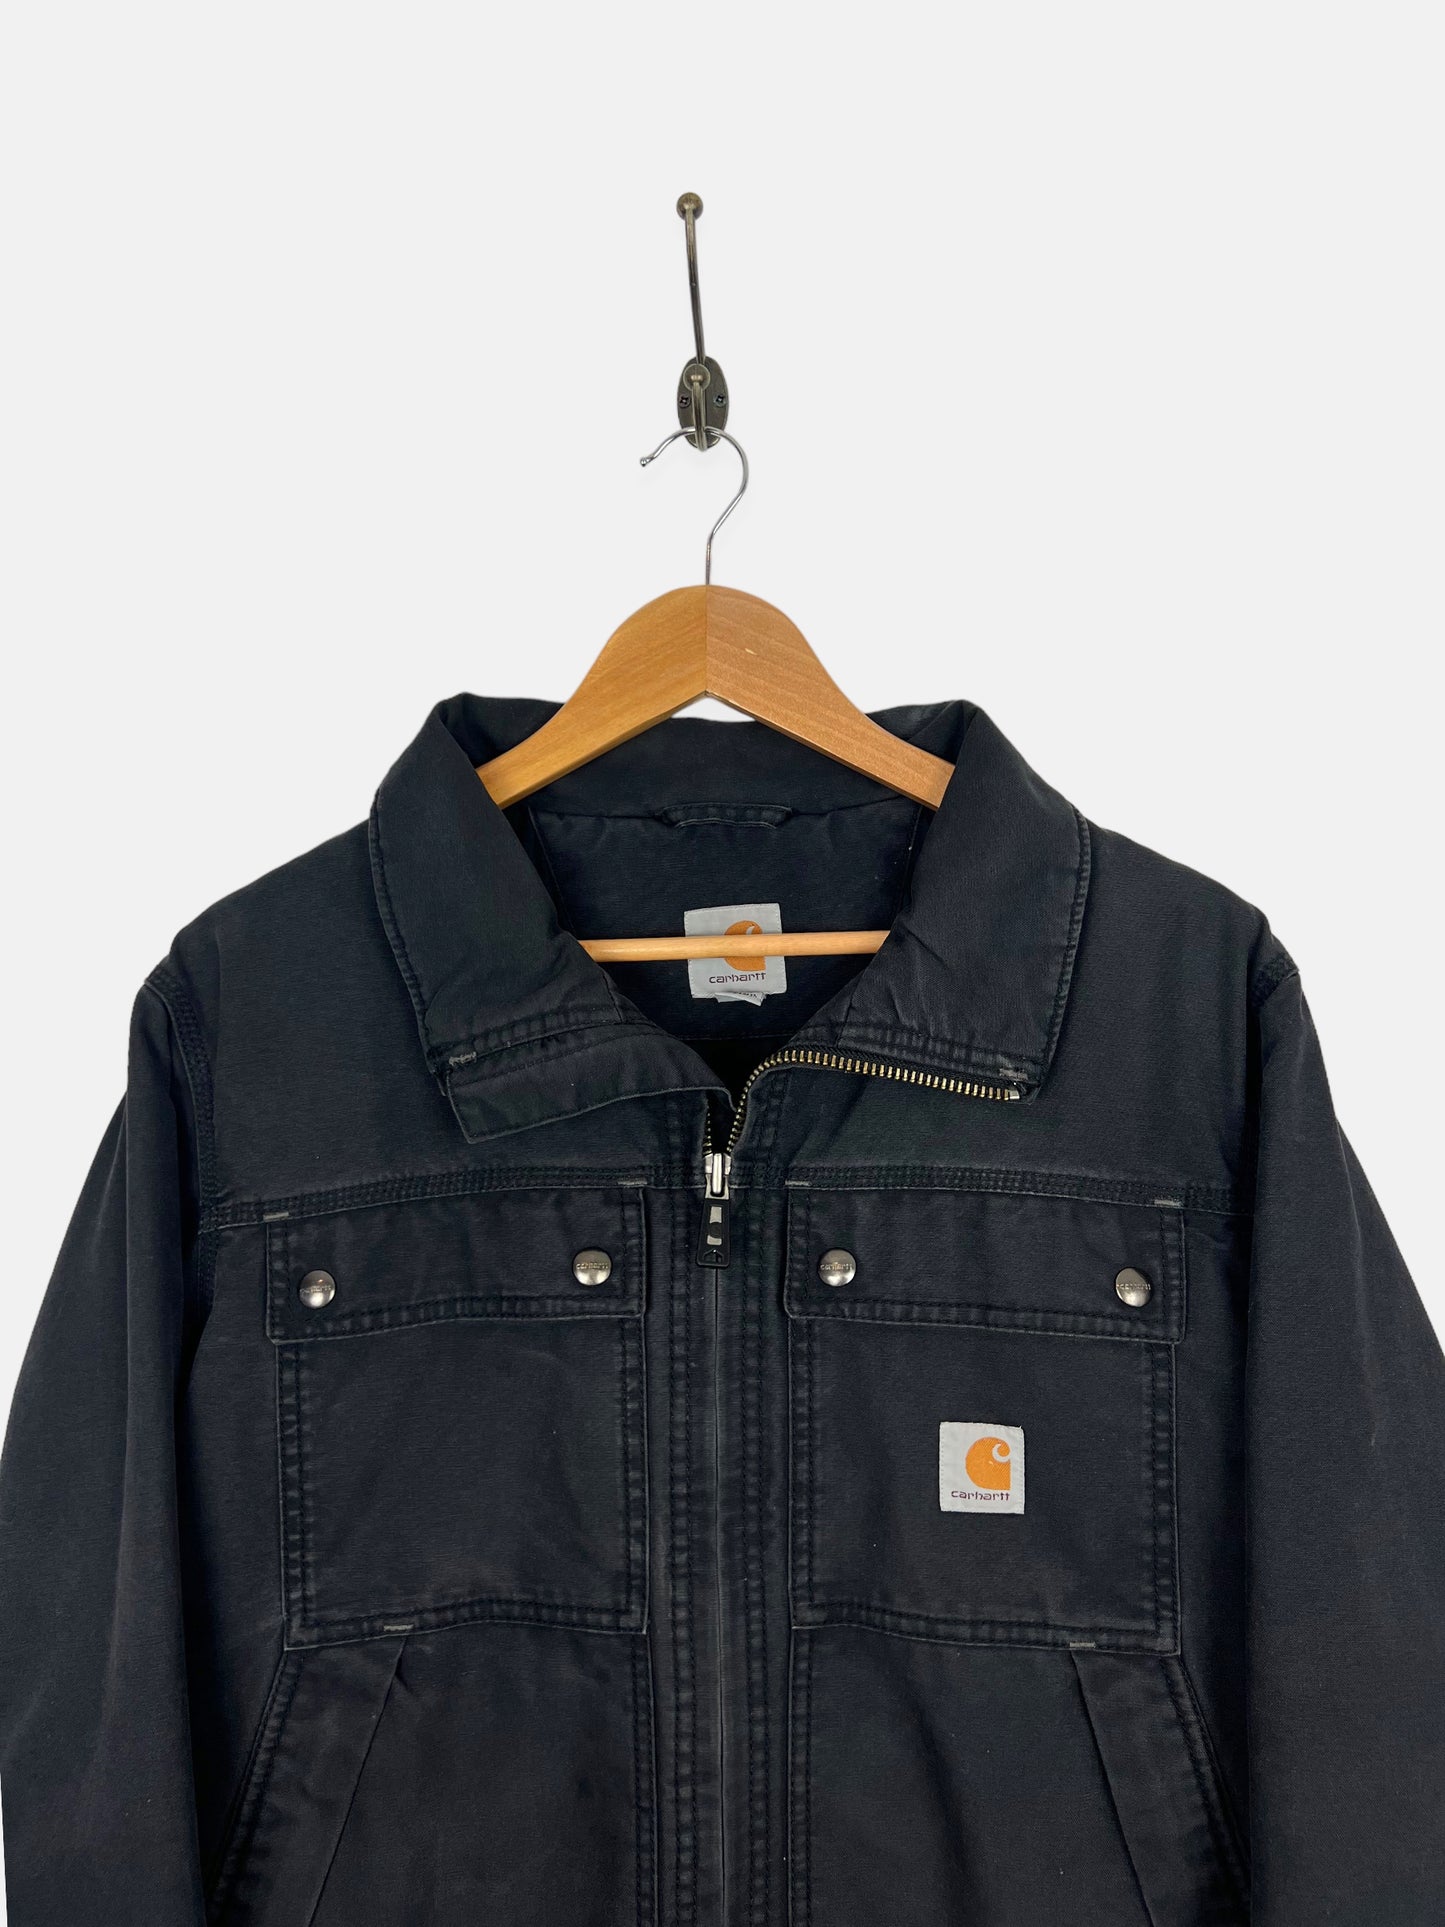 90's Carhartt Heavy Duty Vintage Jacket Size S-M